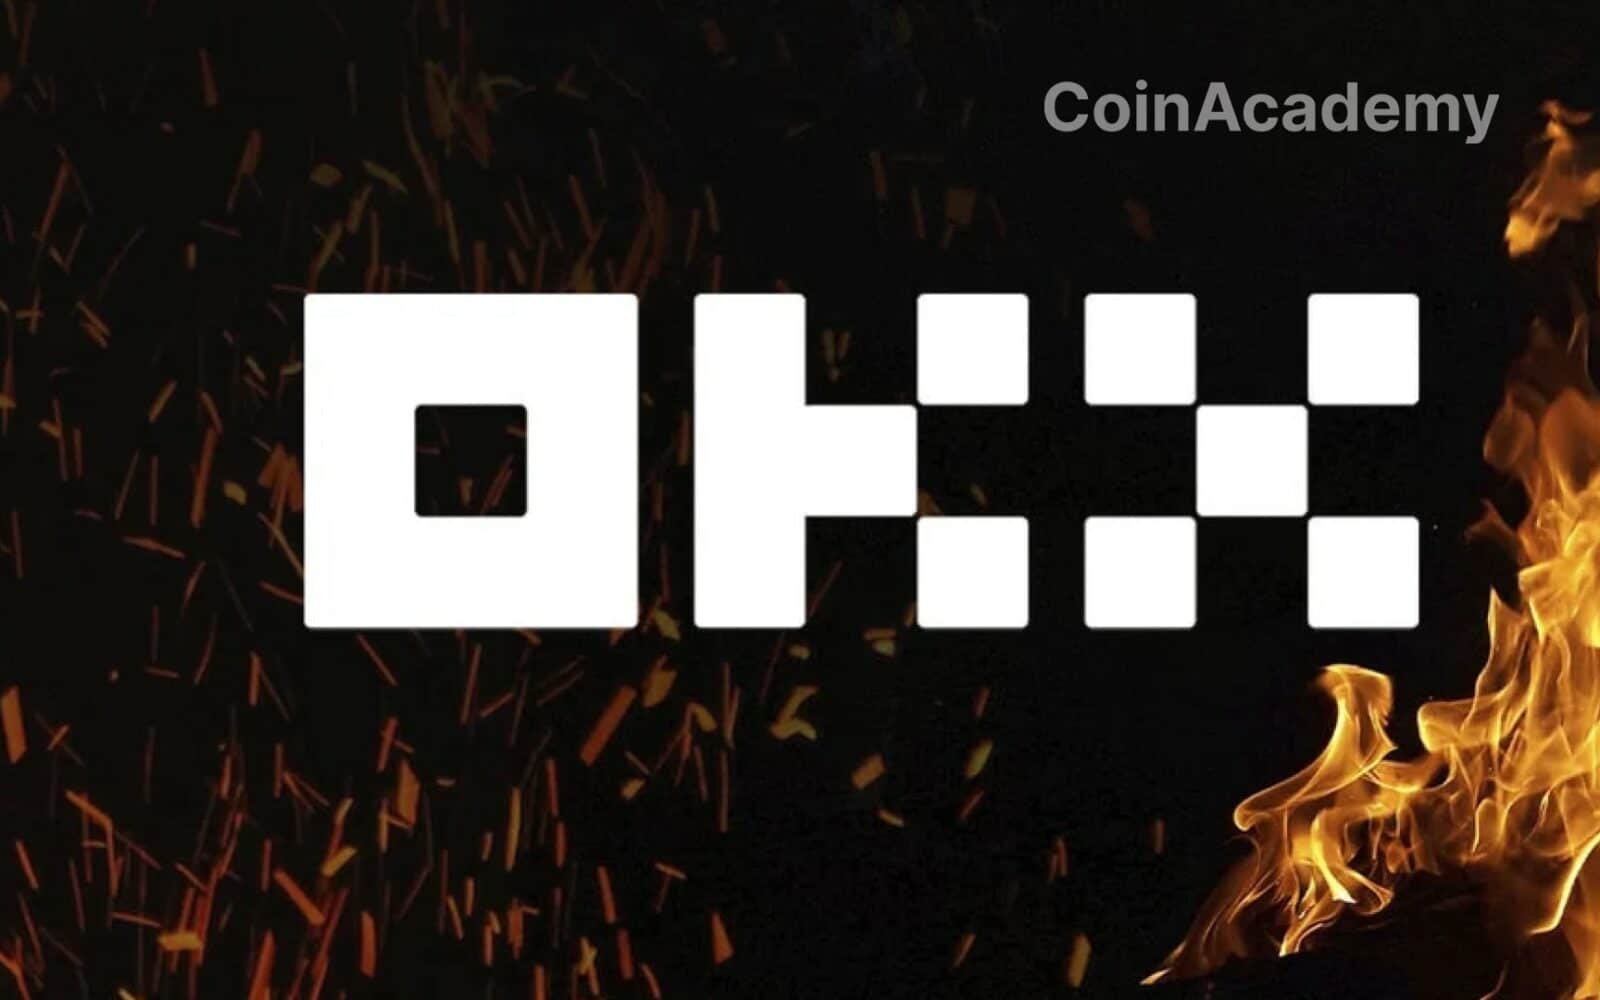 okx okb tokens burn